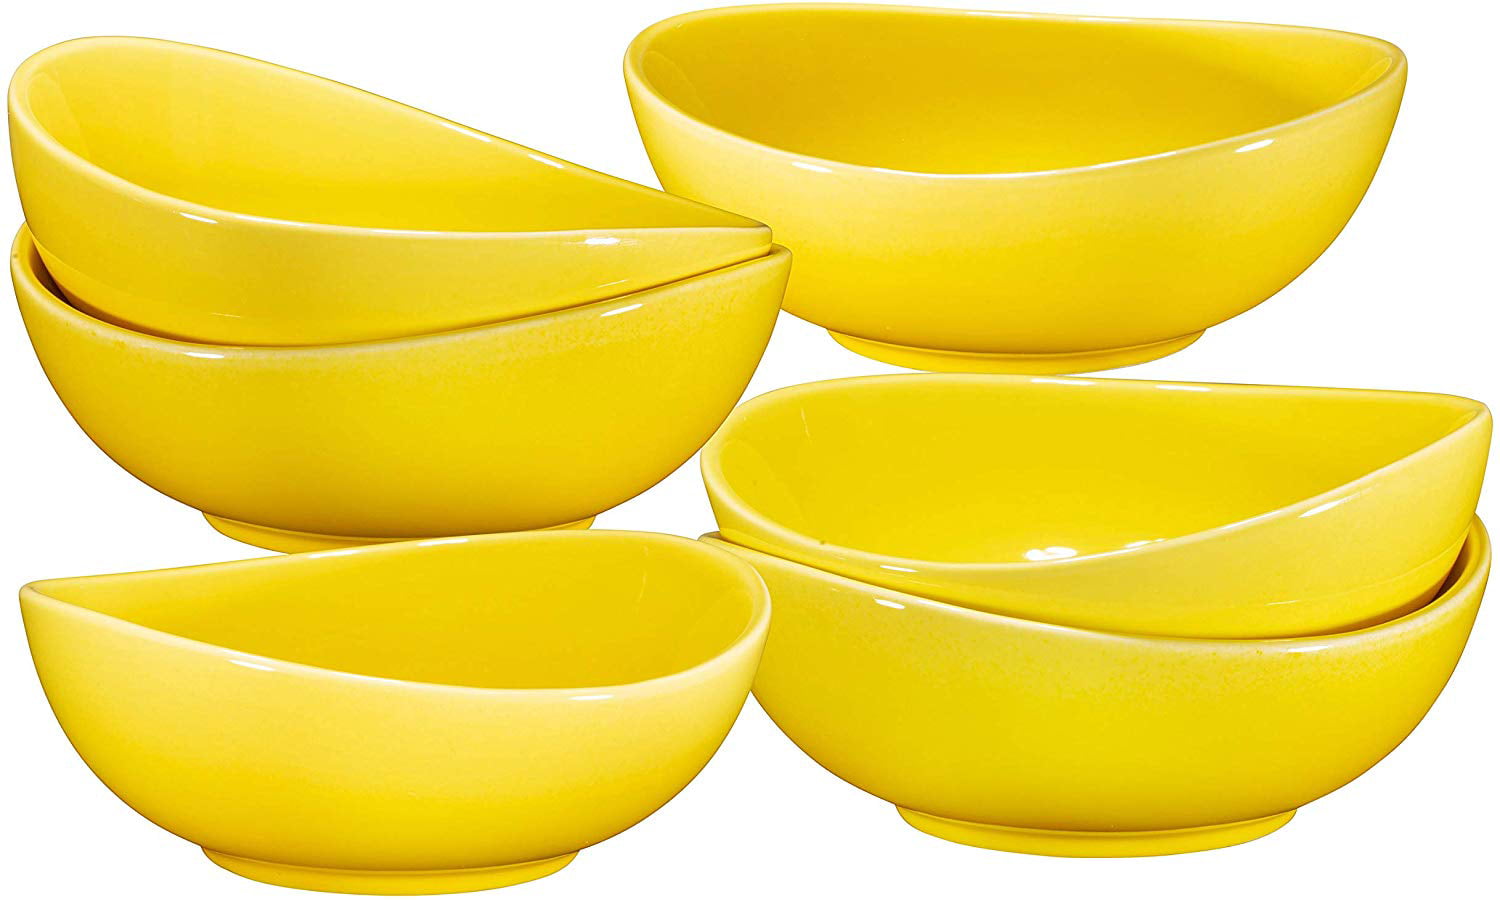 Everyday Ceramic Bowls Set of 4 20 oz By Bruntmor Multicolor 